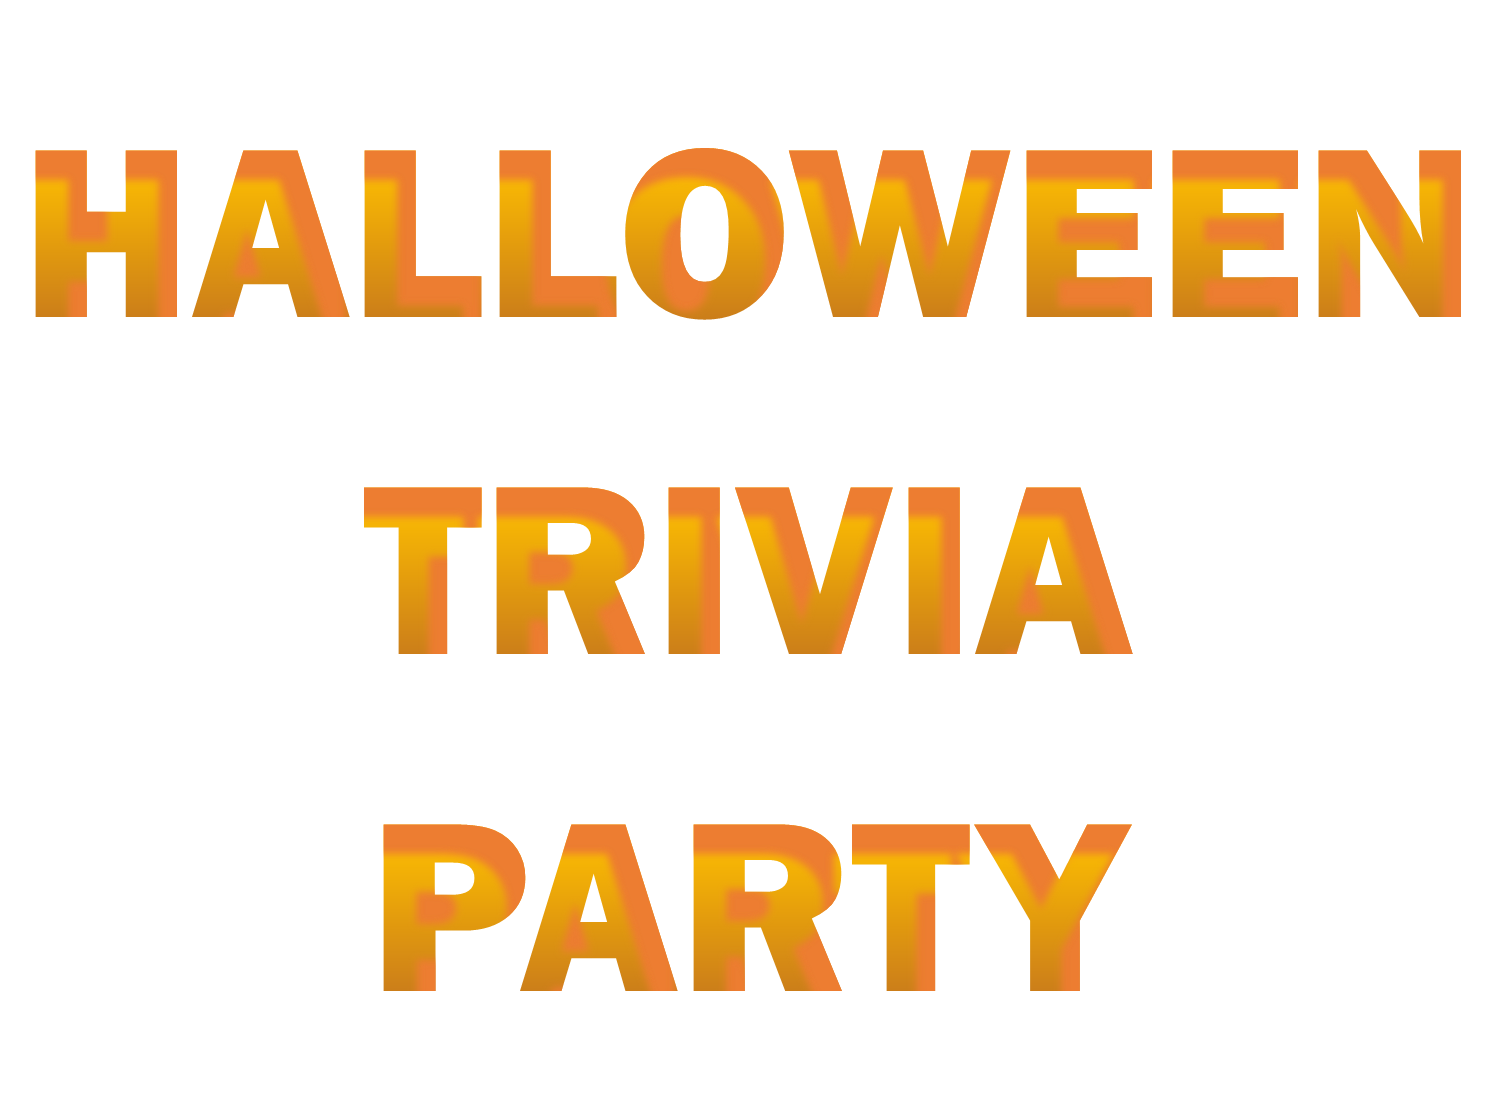 text - Halloween trivia party